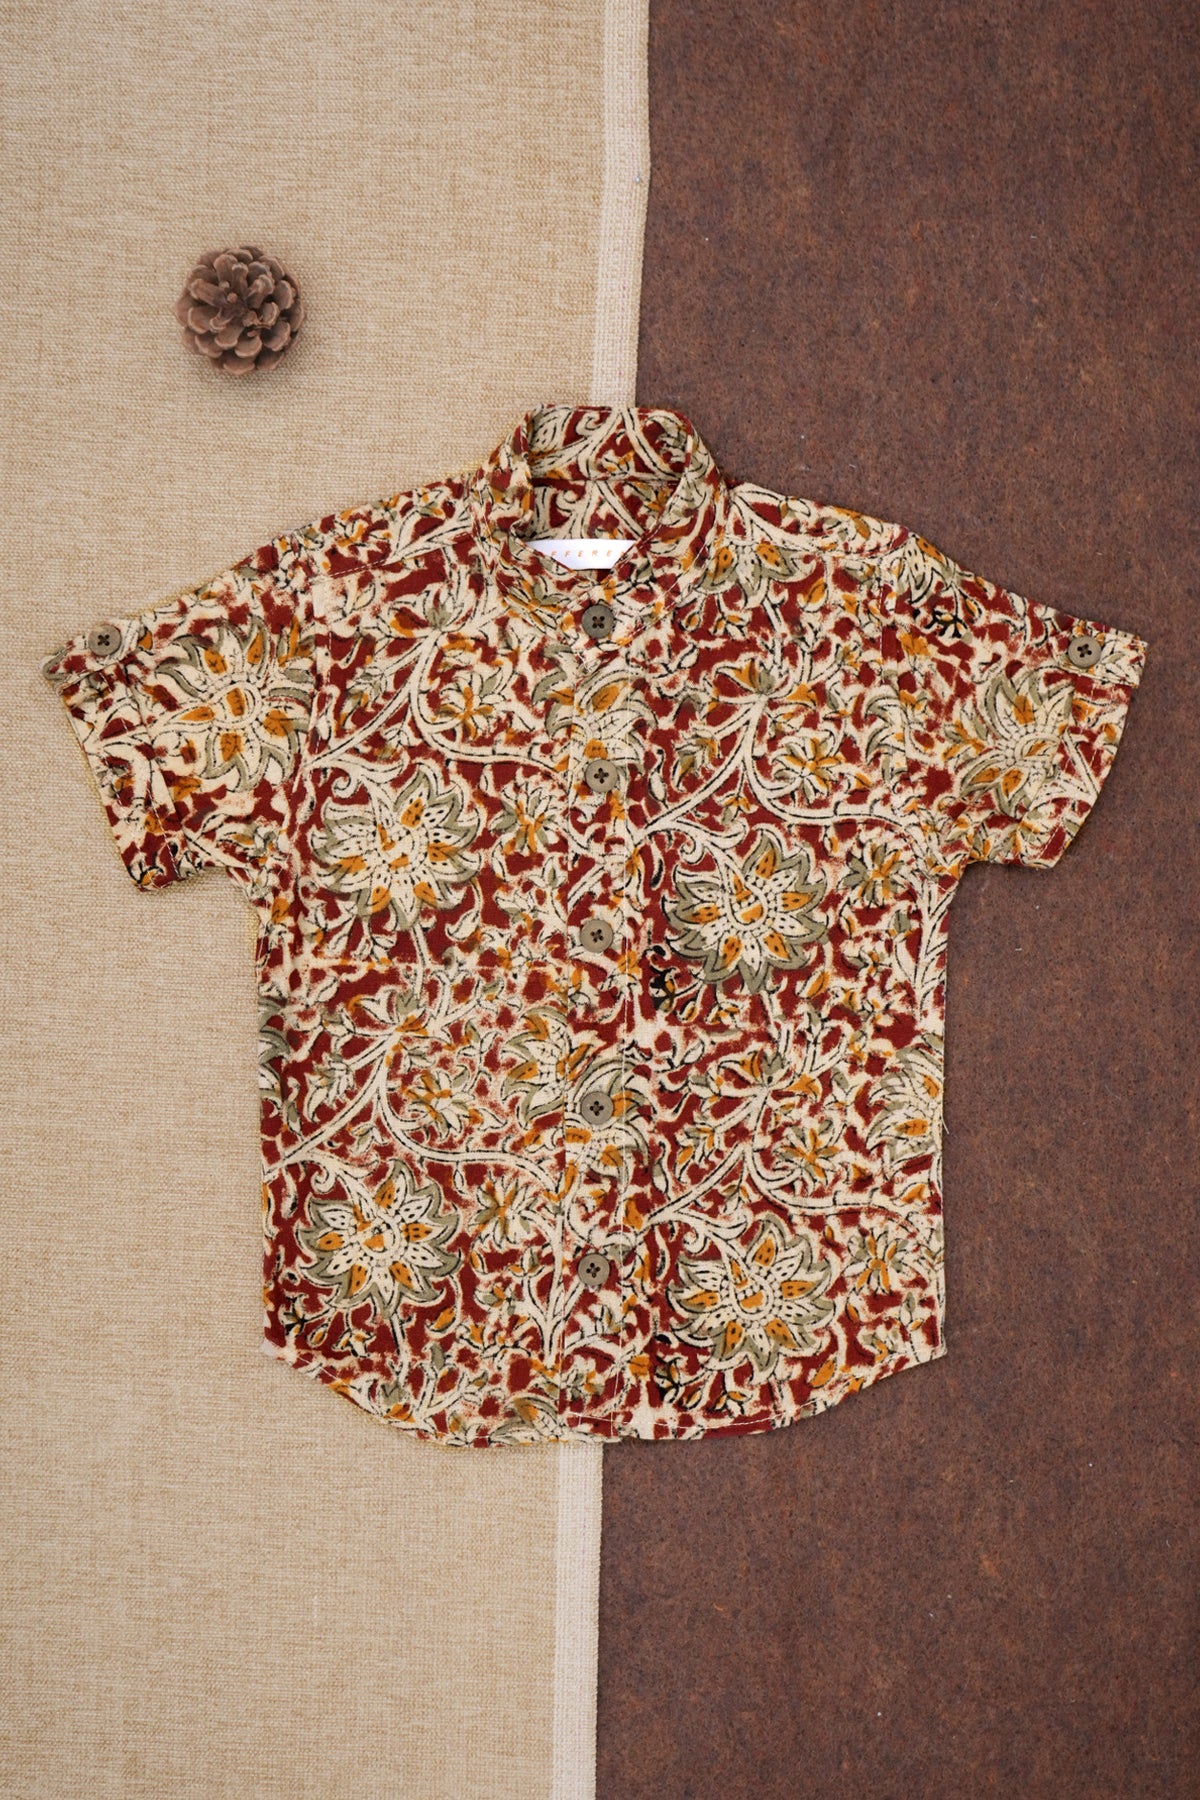 Chinese Collar With Kalamkari Printed Maroon Cotton Shirt